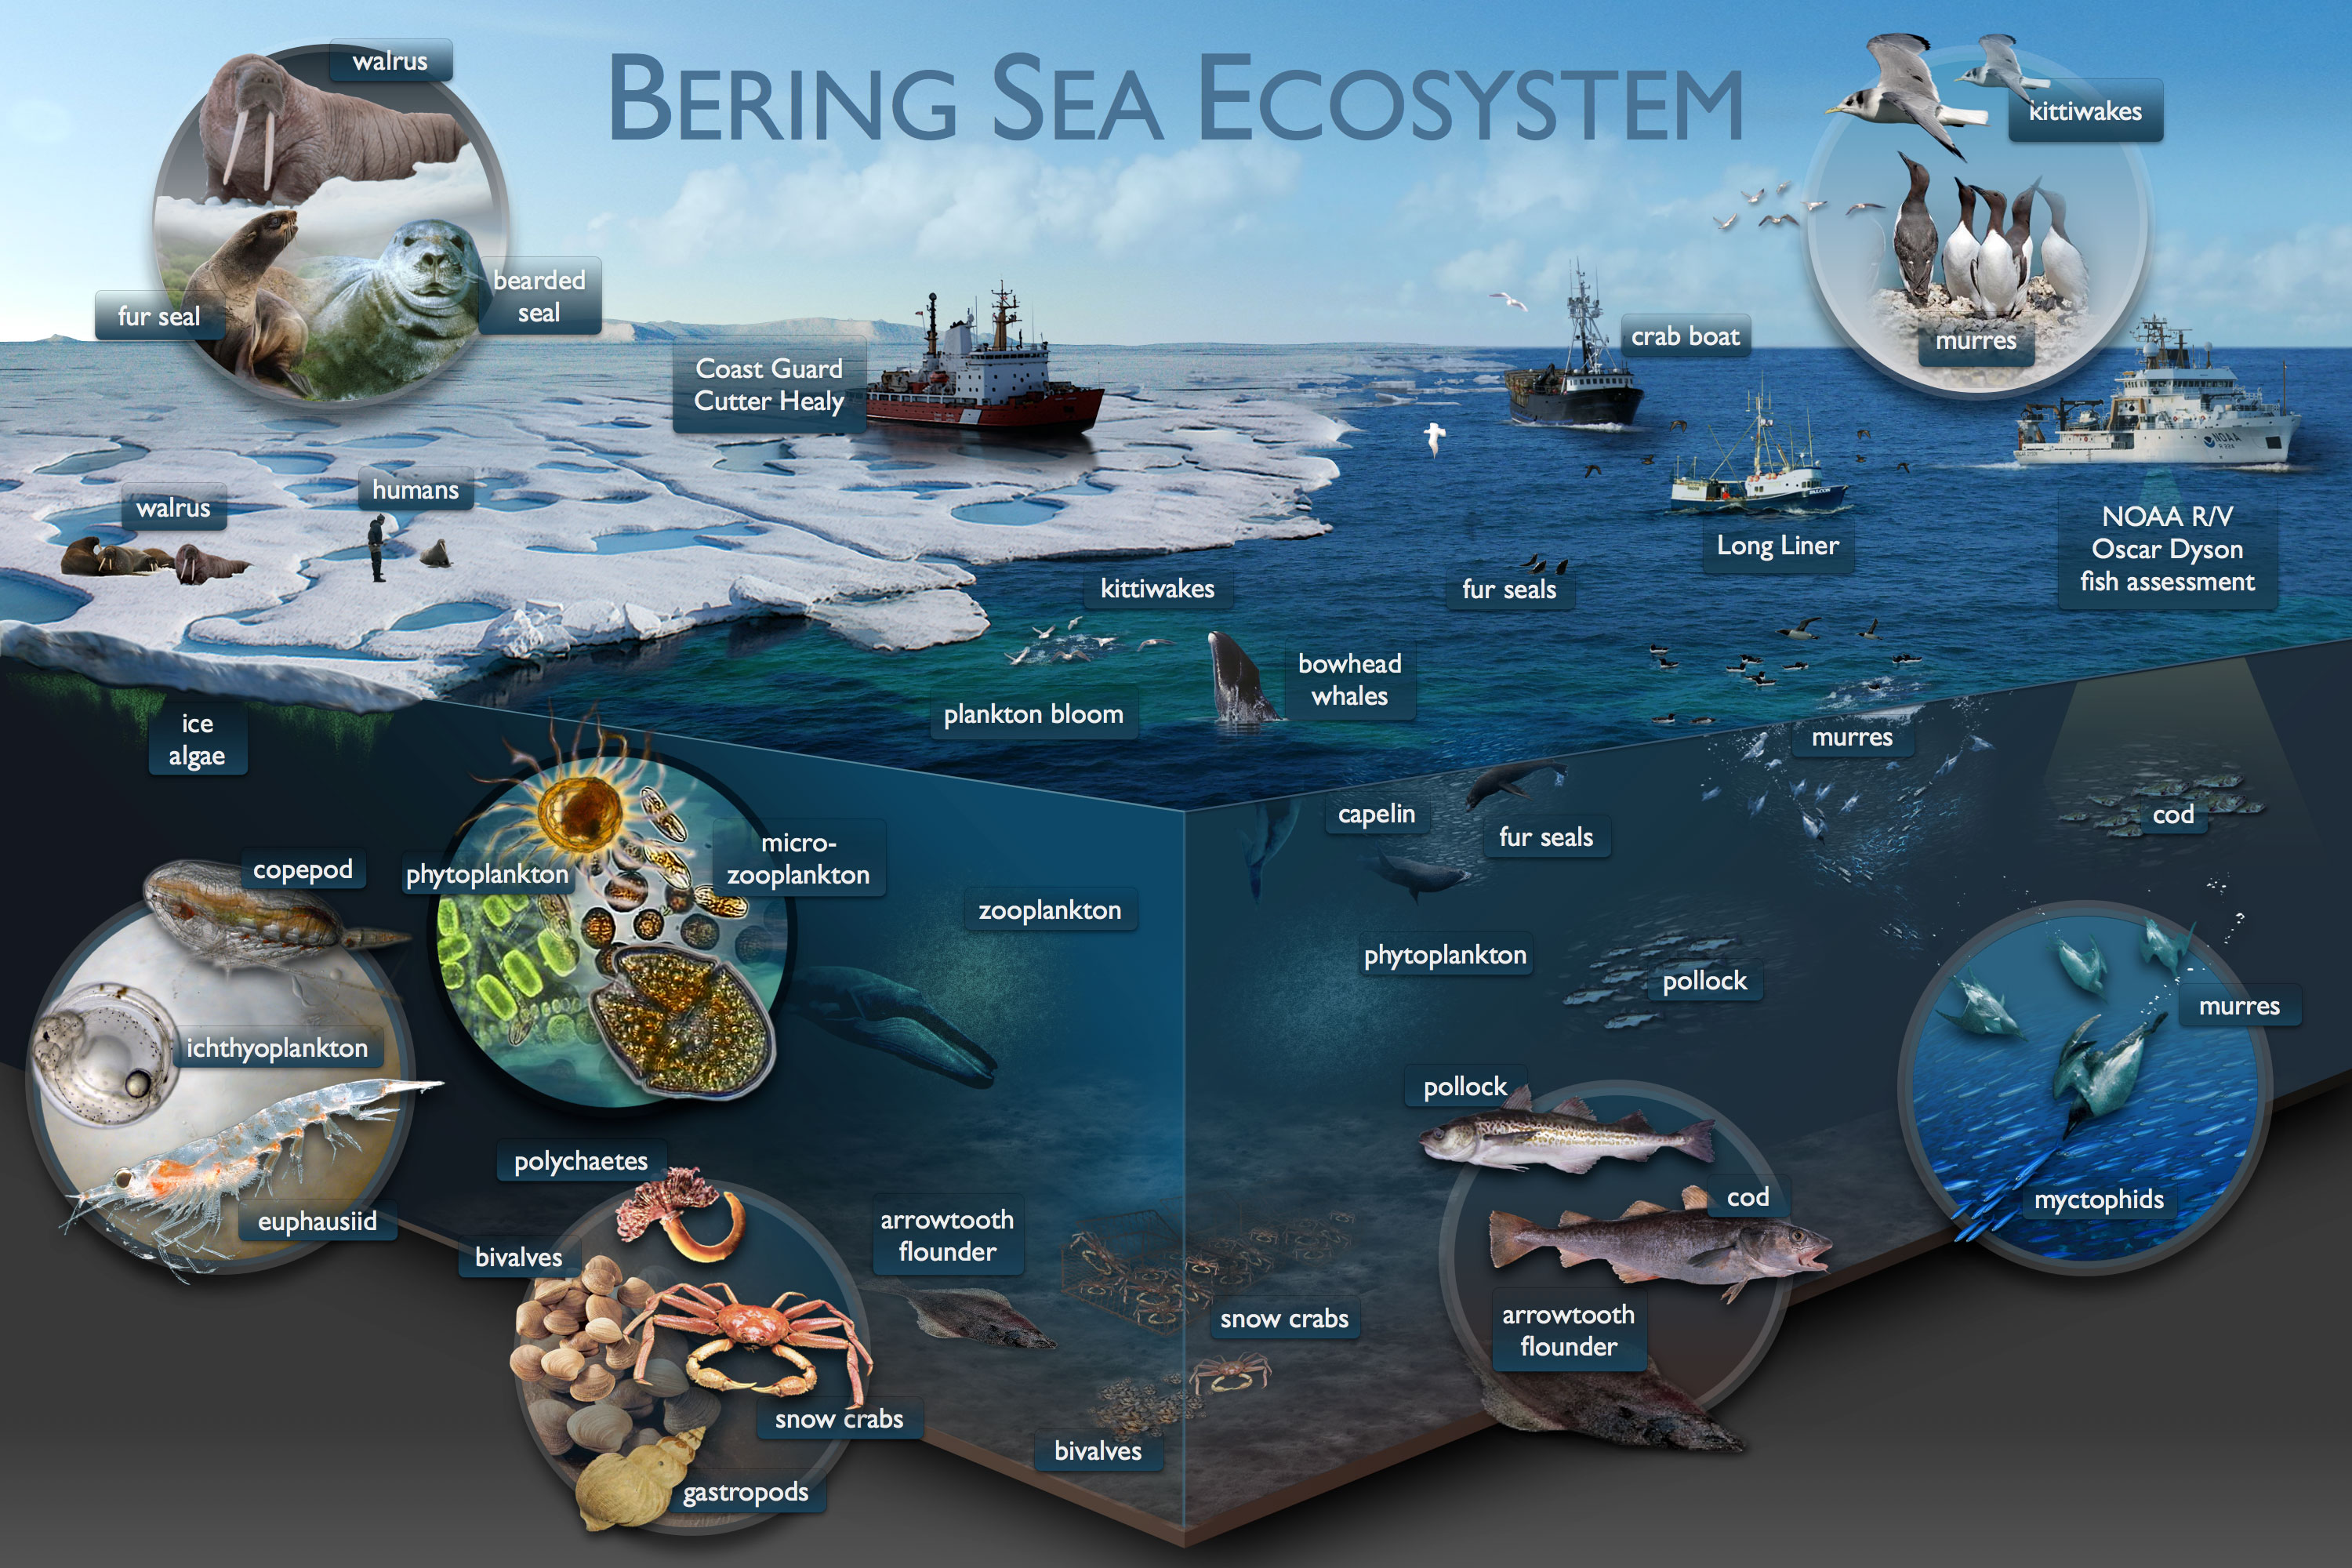 Bering sea ecosystem | Beringinmeri | Pinterest | Ecosystems, Oscar